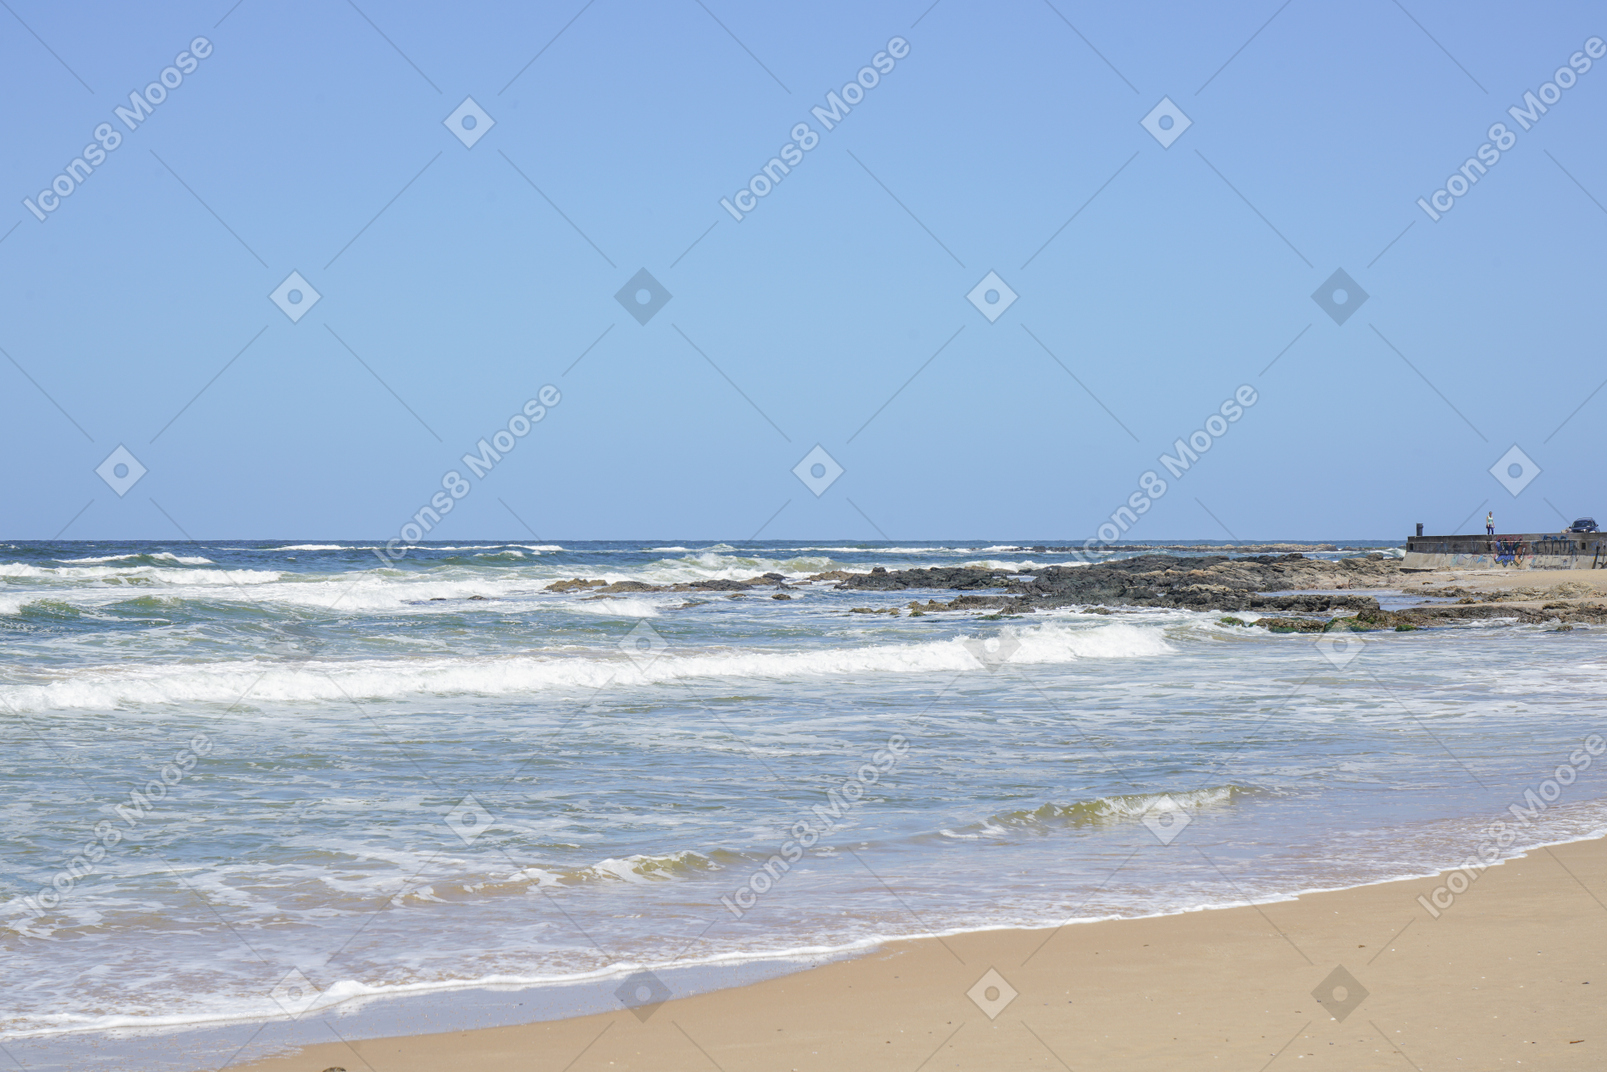 Beach and sea waves